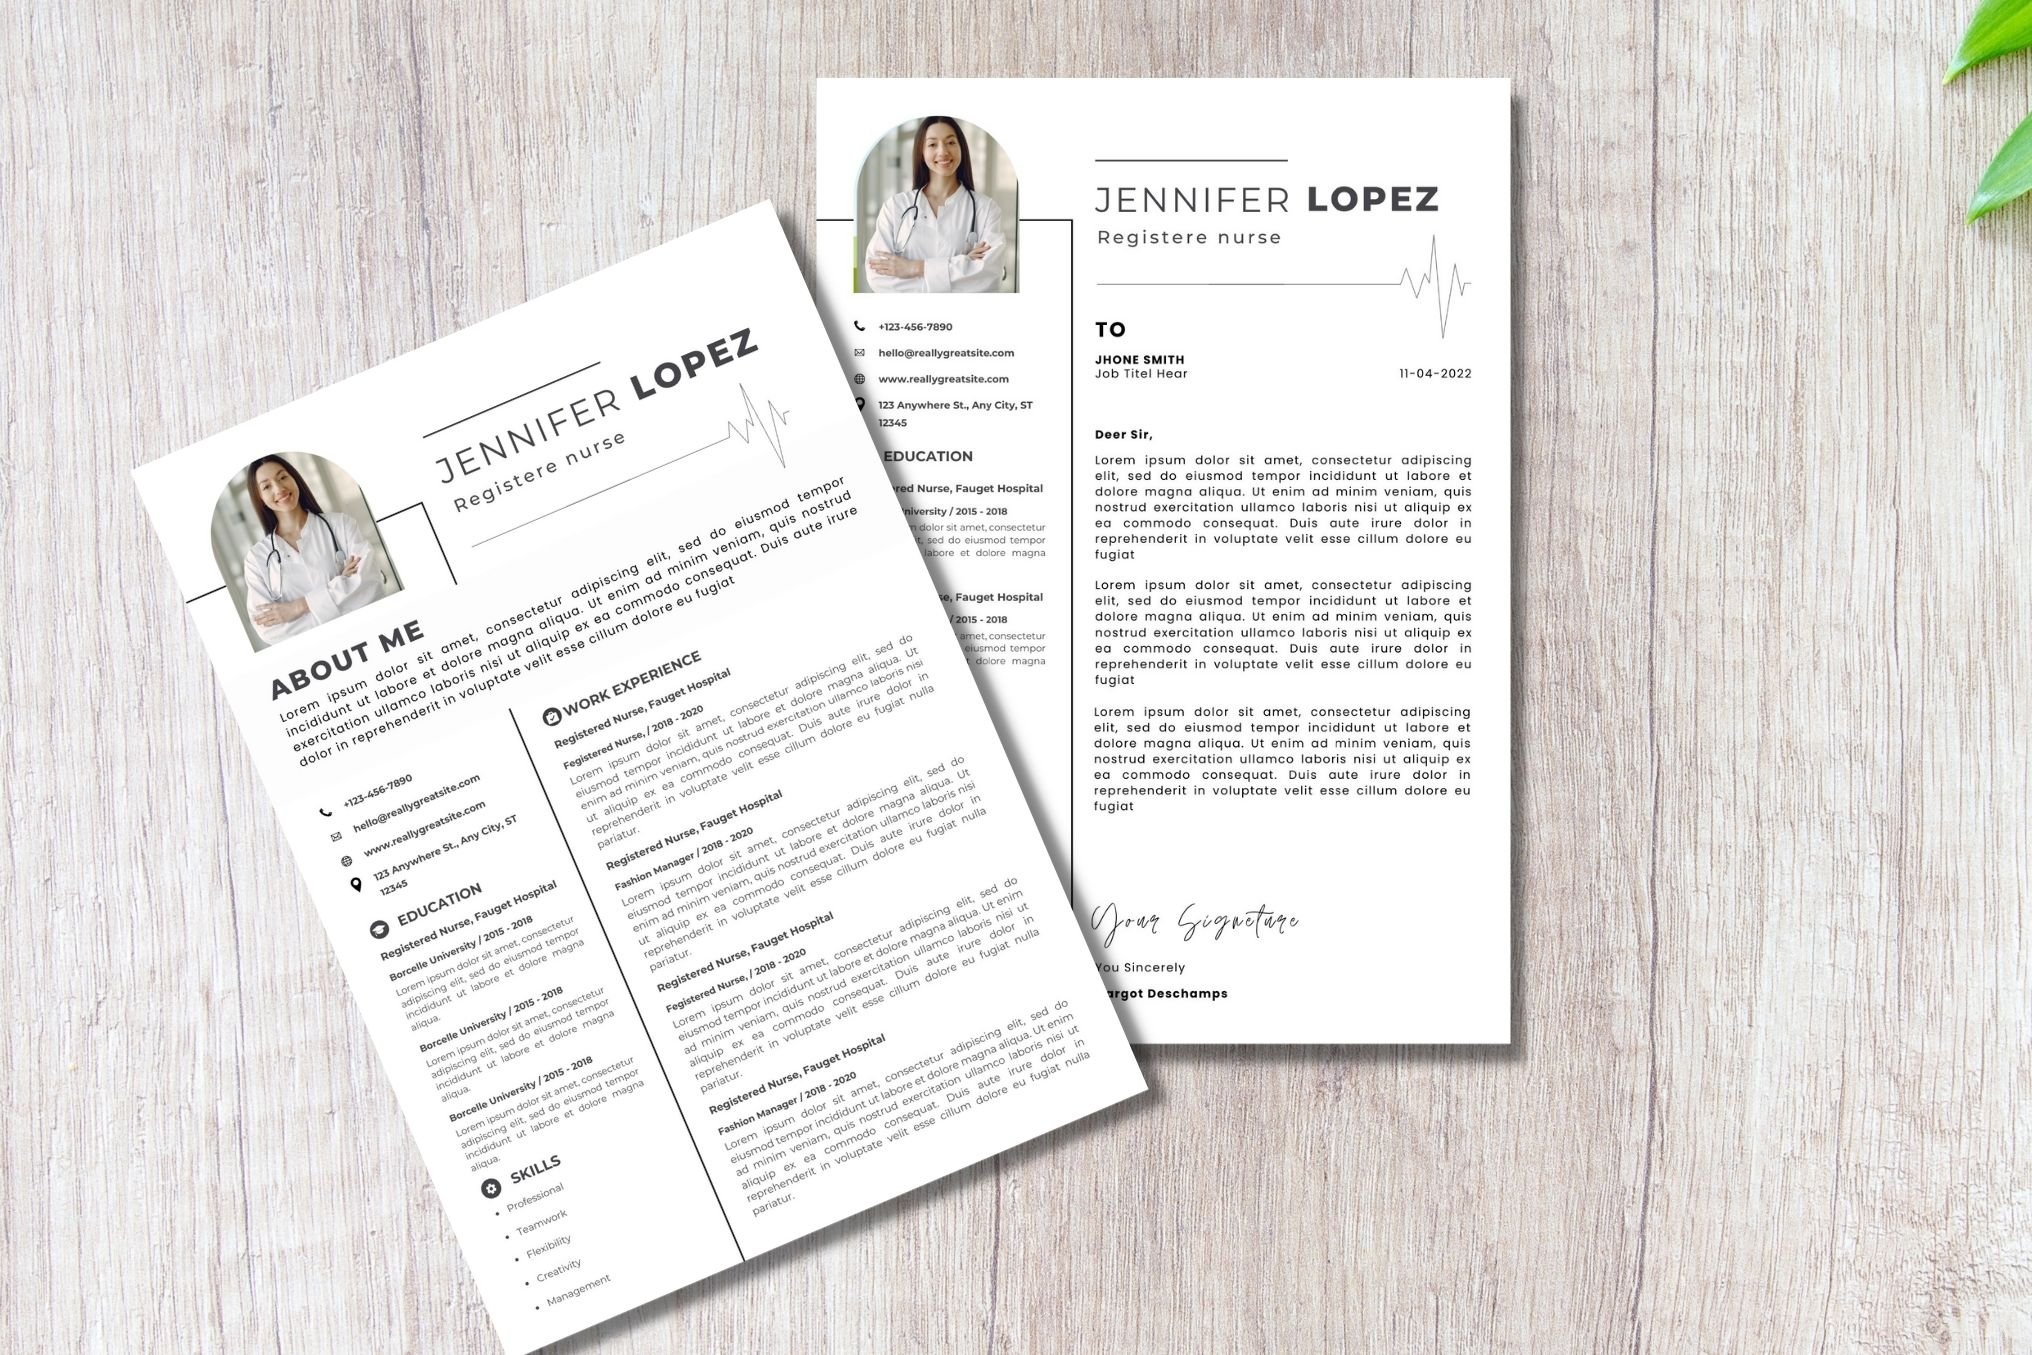 registered nurse resume template preview image.